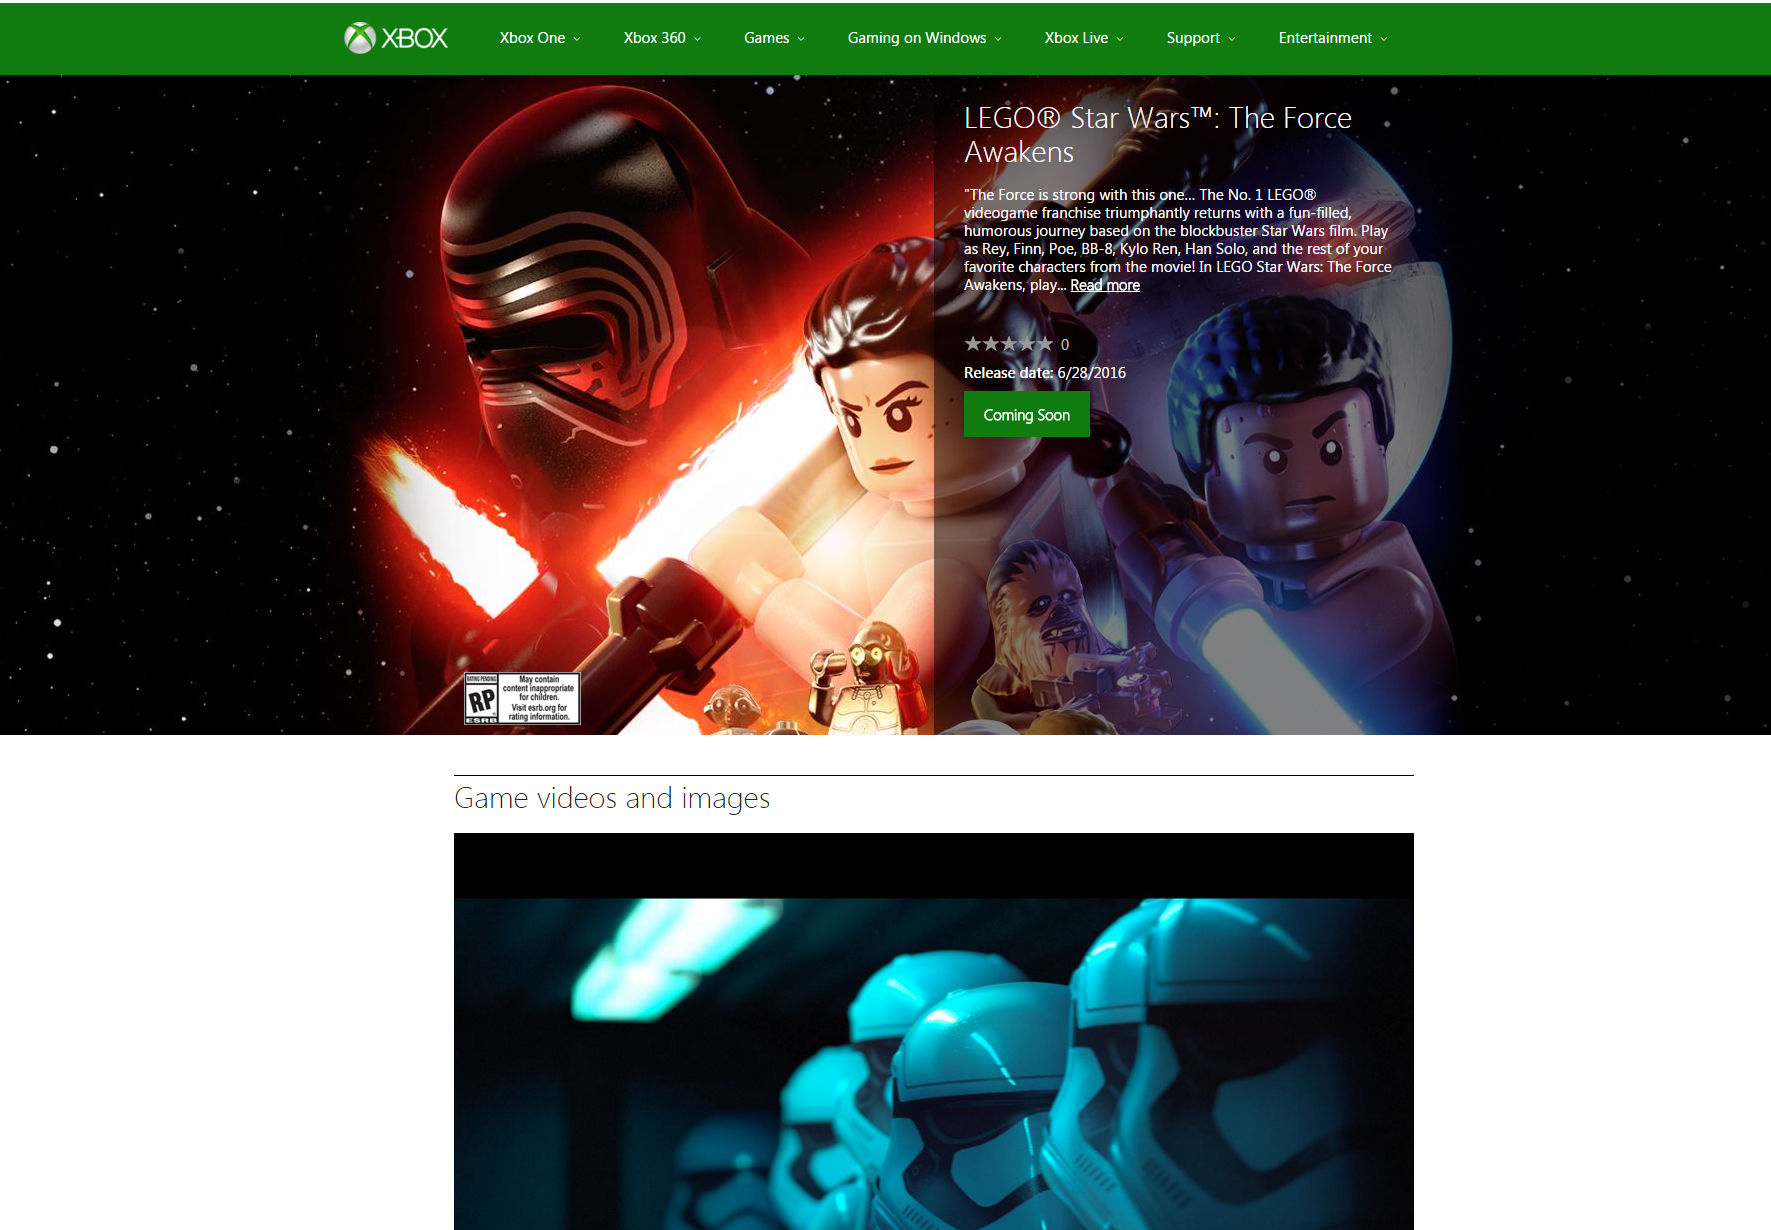 'LEGO Star Wars: The Force Awakens' xbox.com